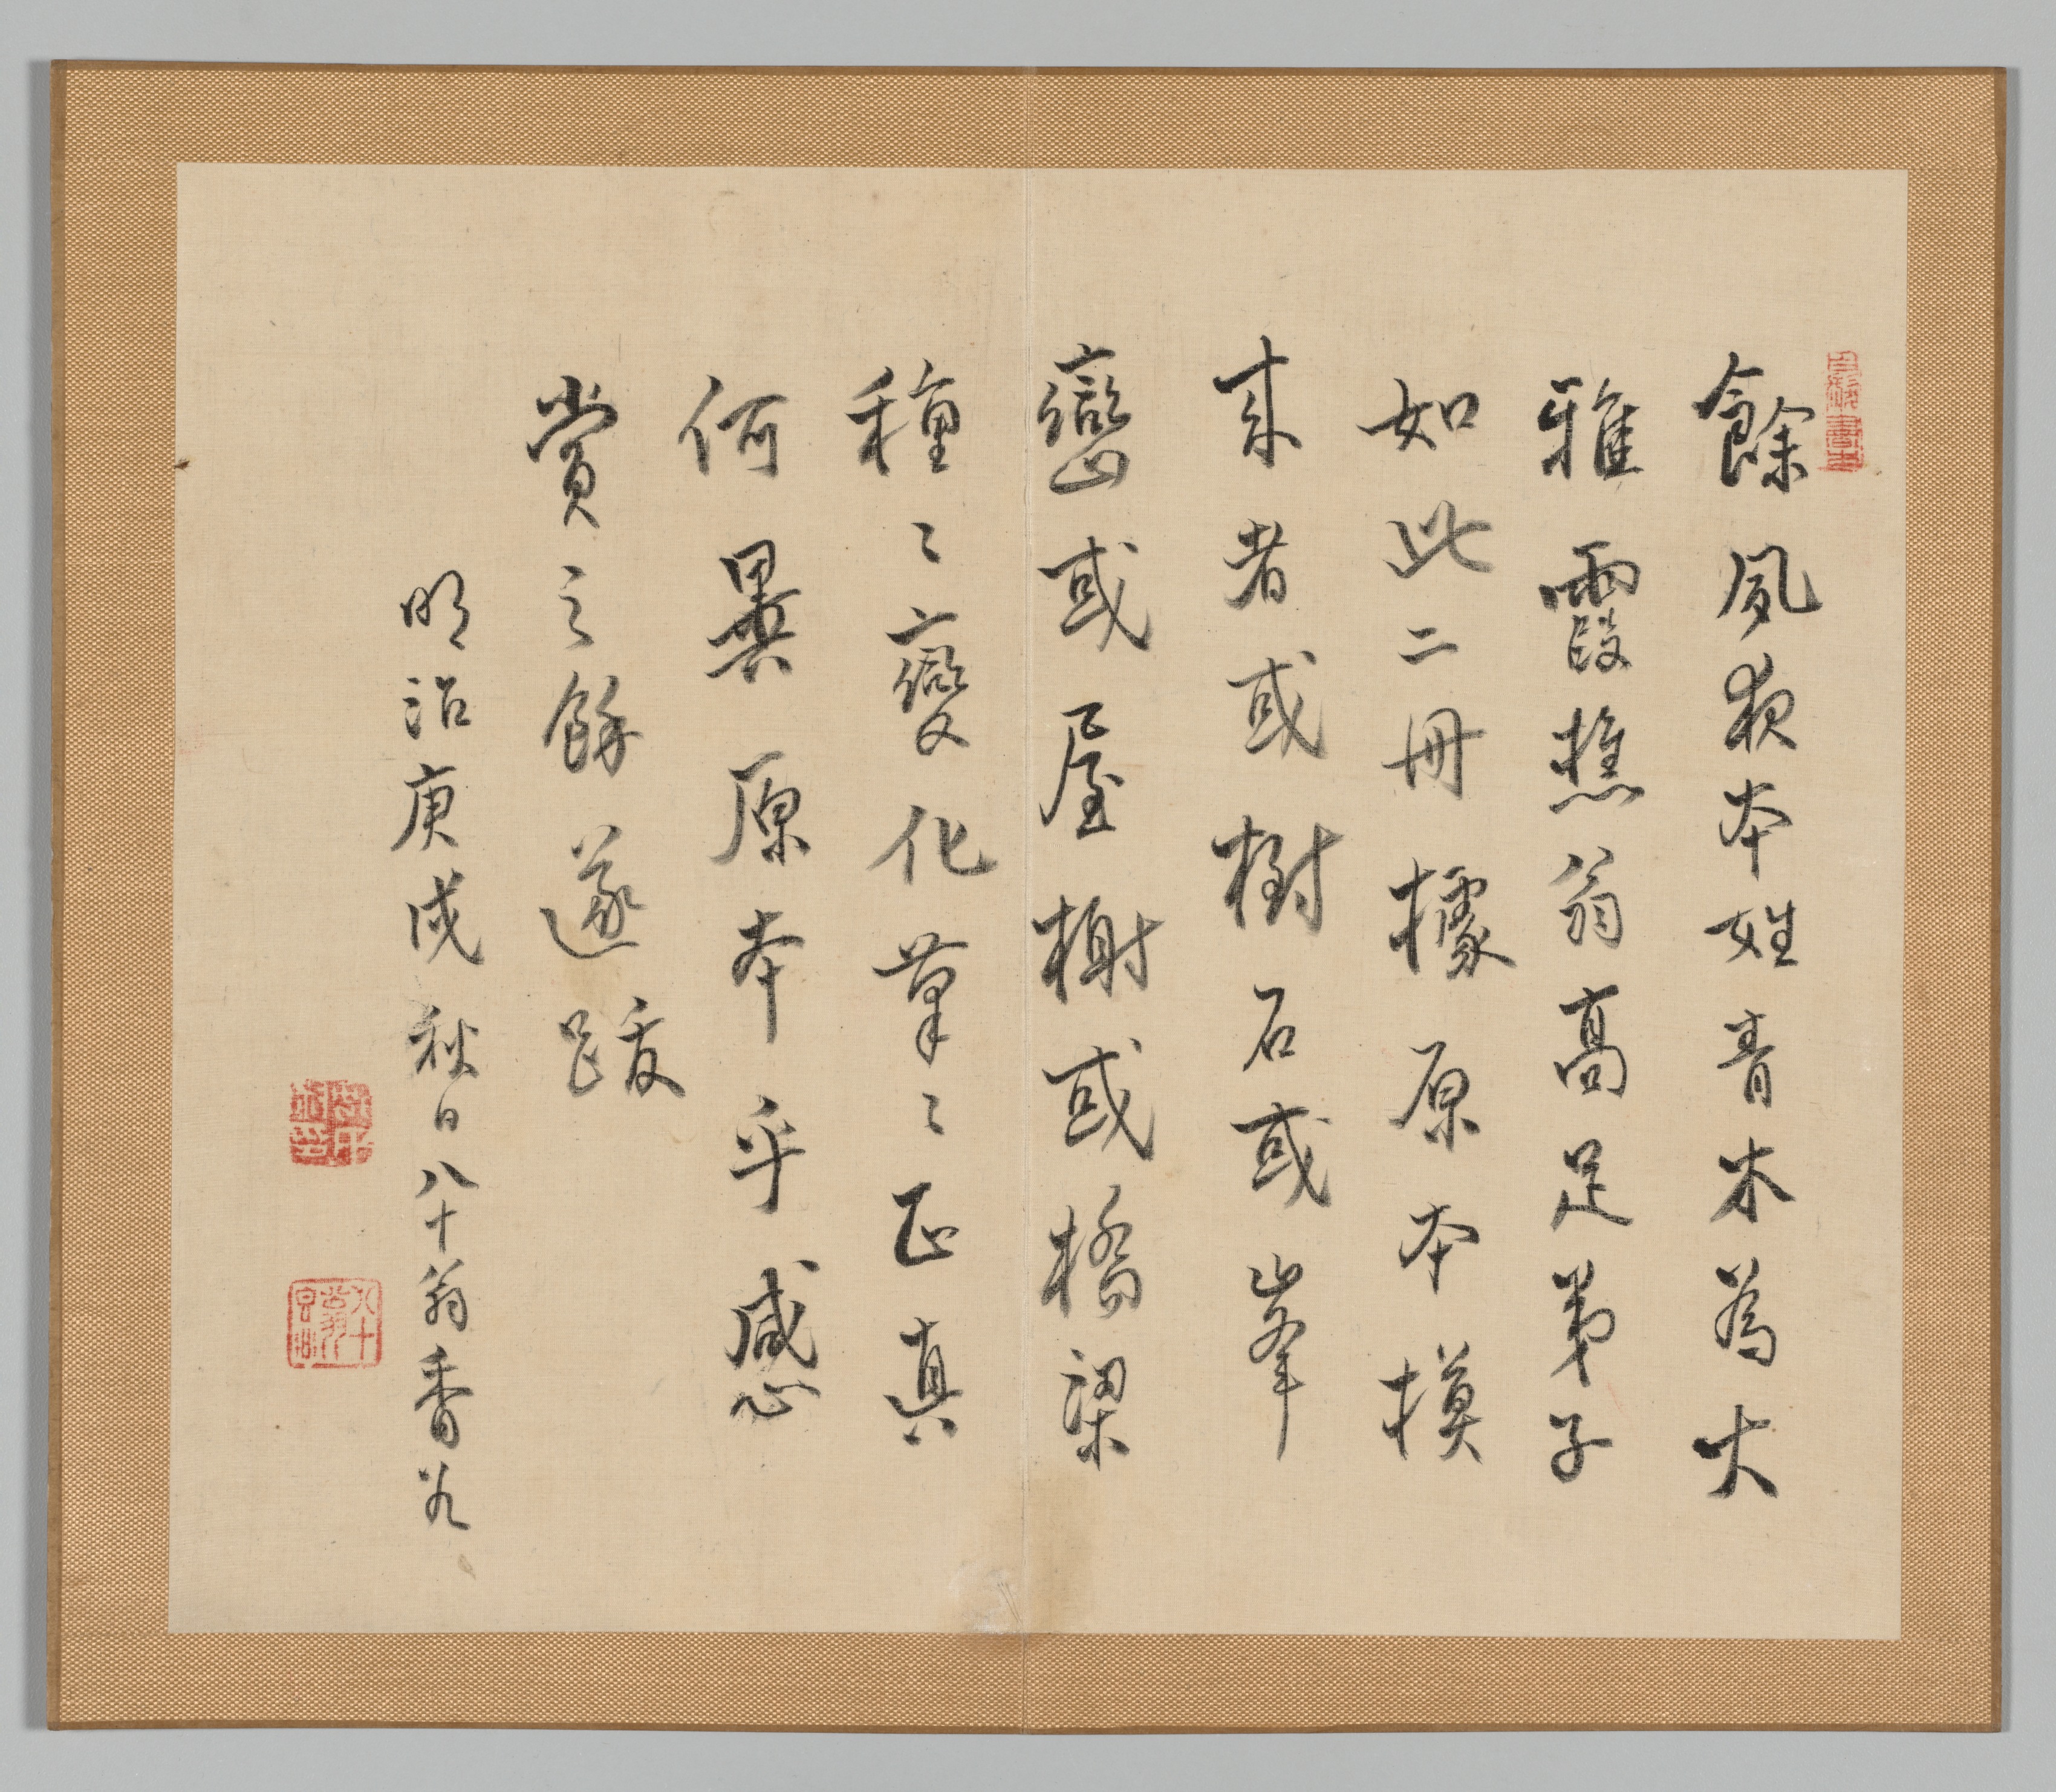 Reverberations of Taiga, Volume 2 (leaf 36)